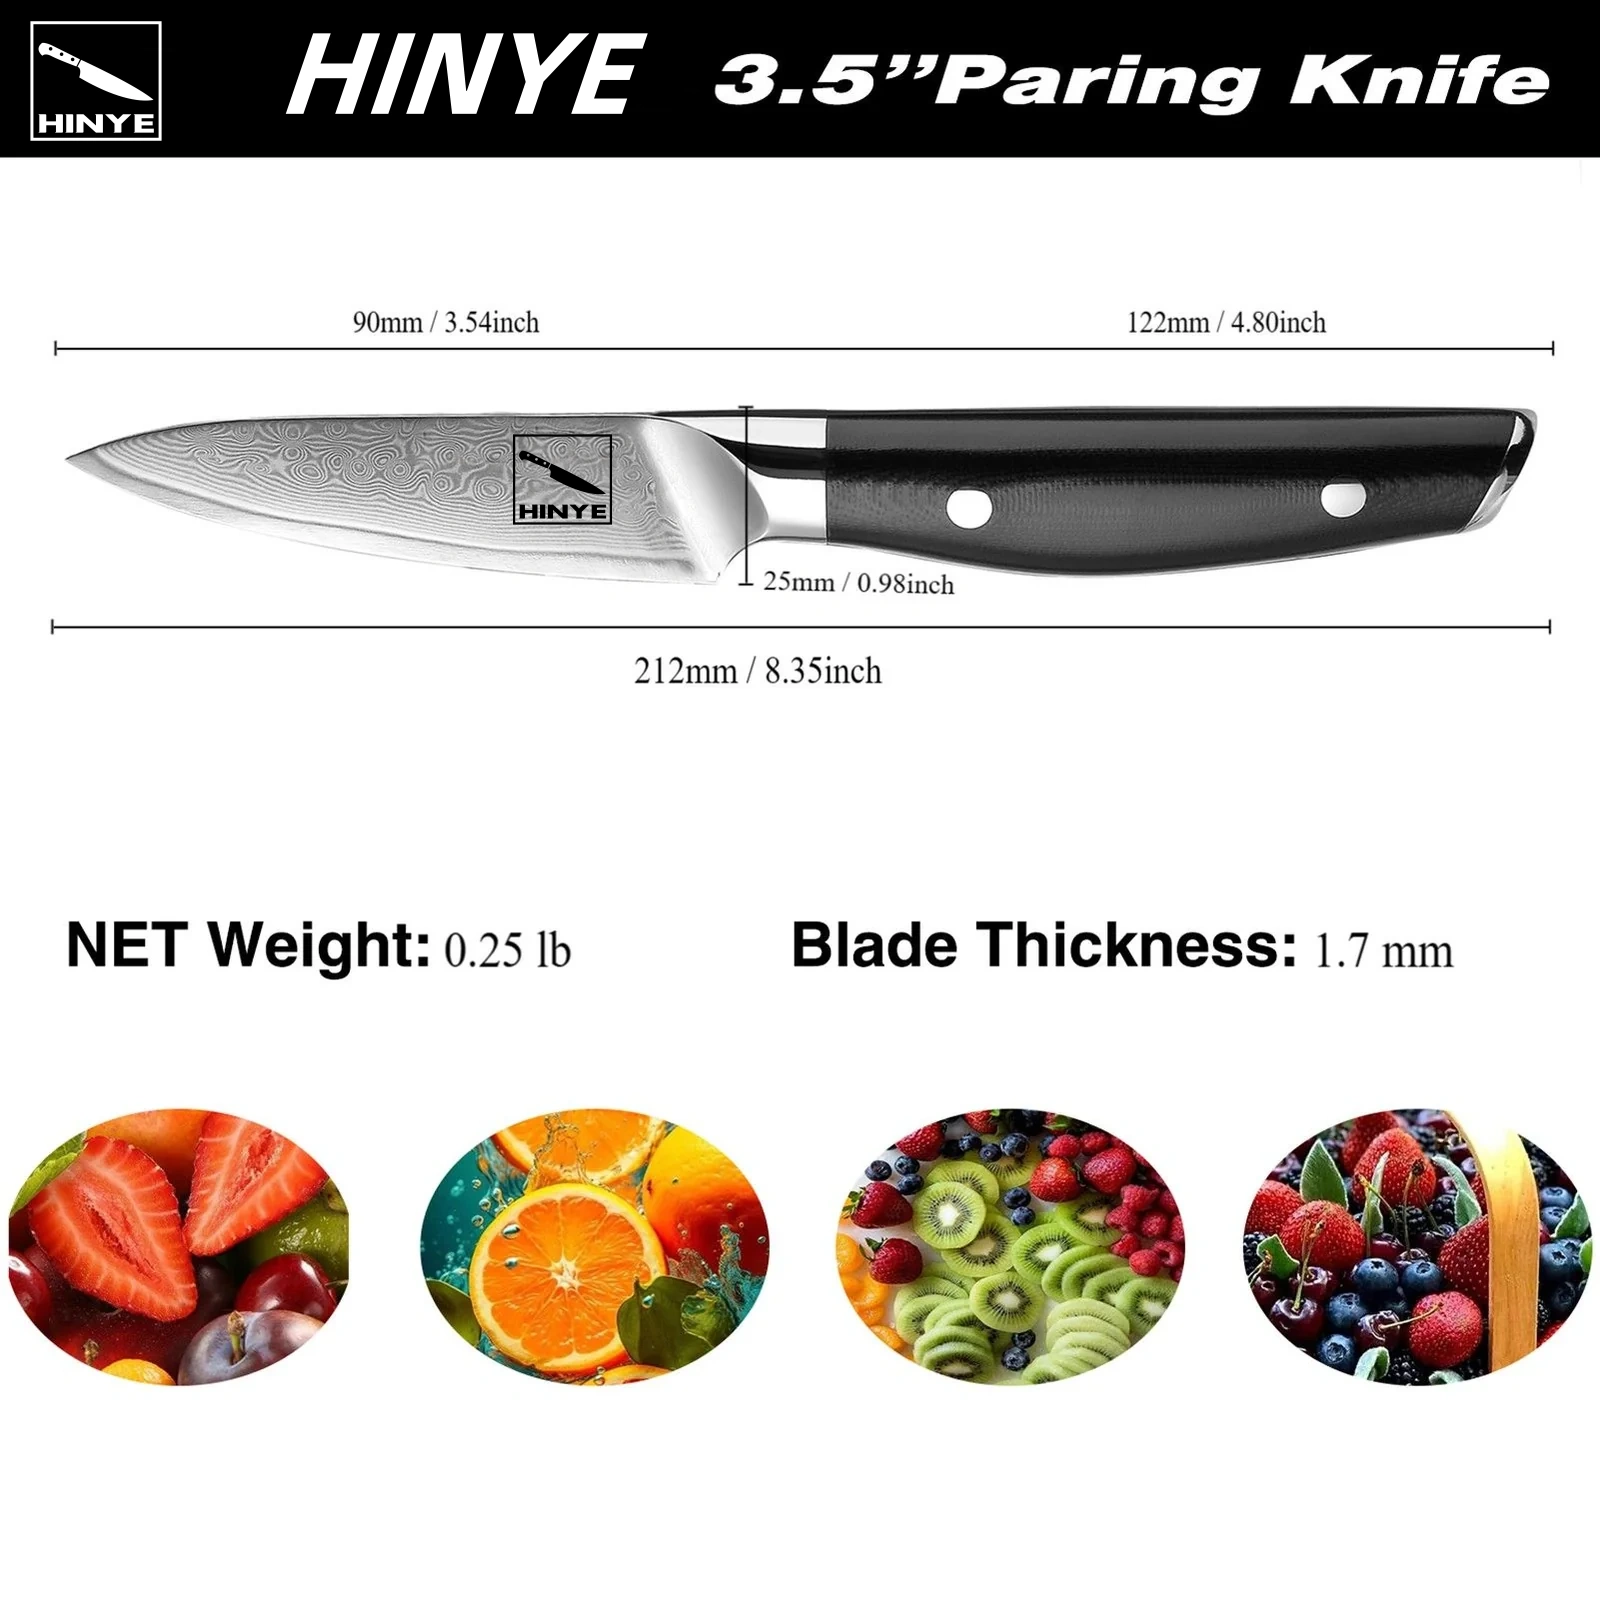 Hinye-Luxor 3.5" Paring